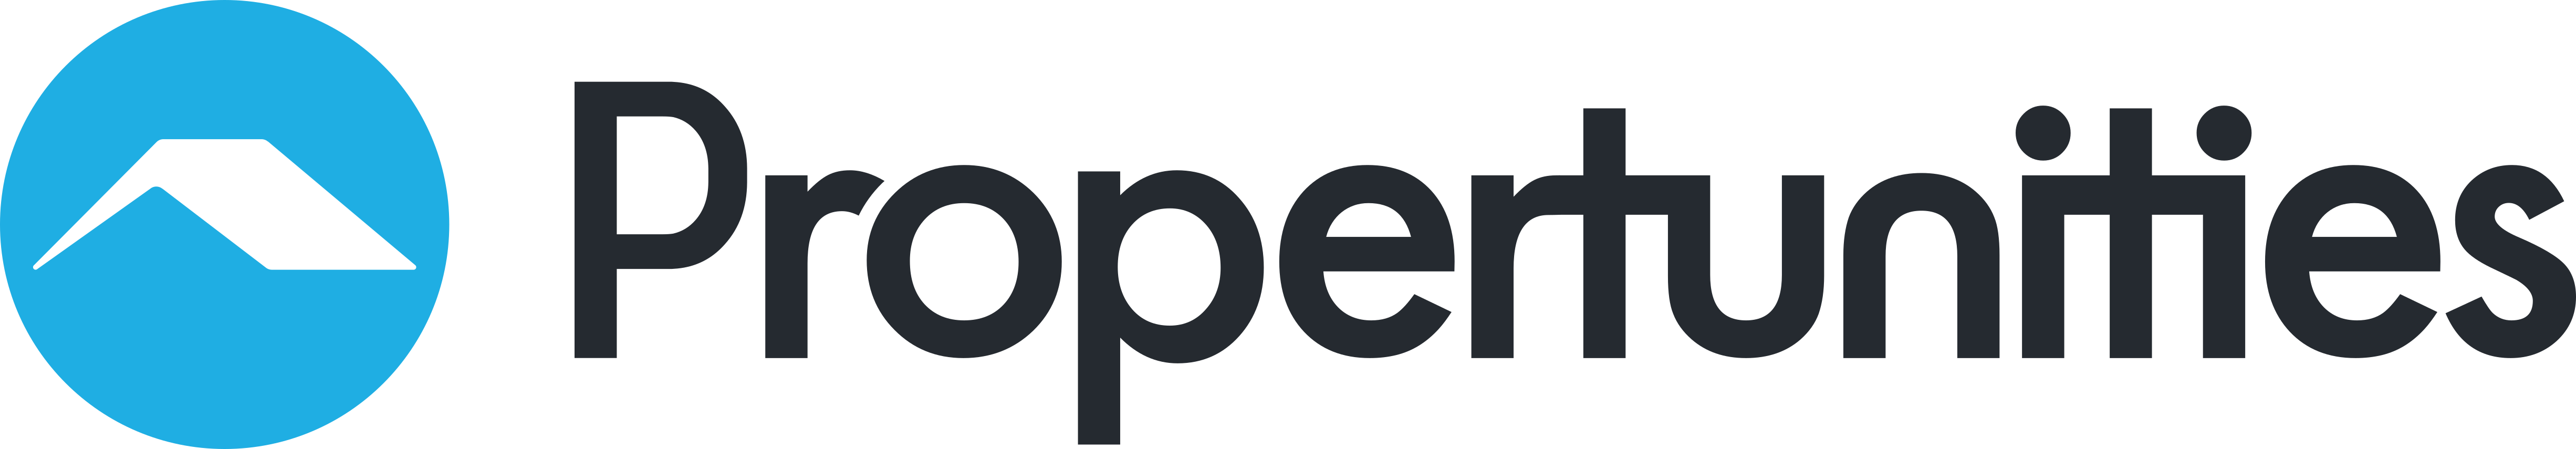 Propertunities Mark Logo